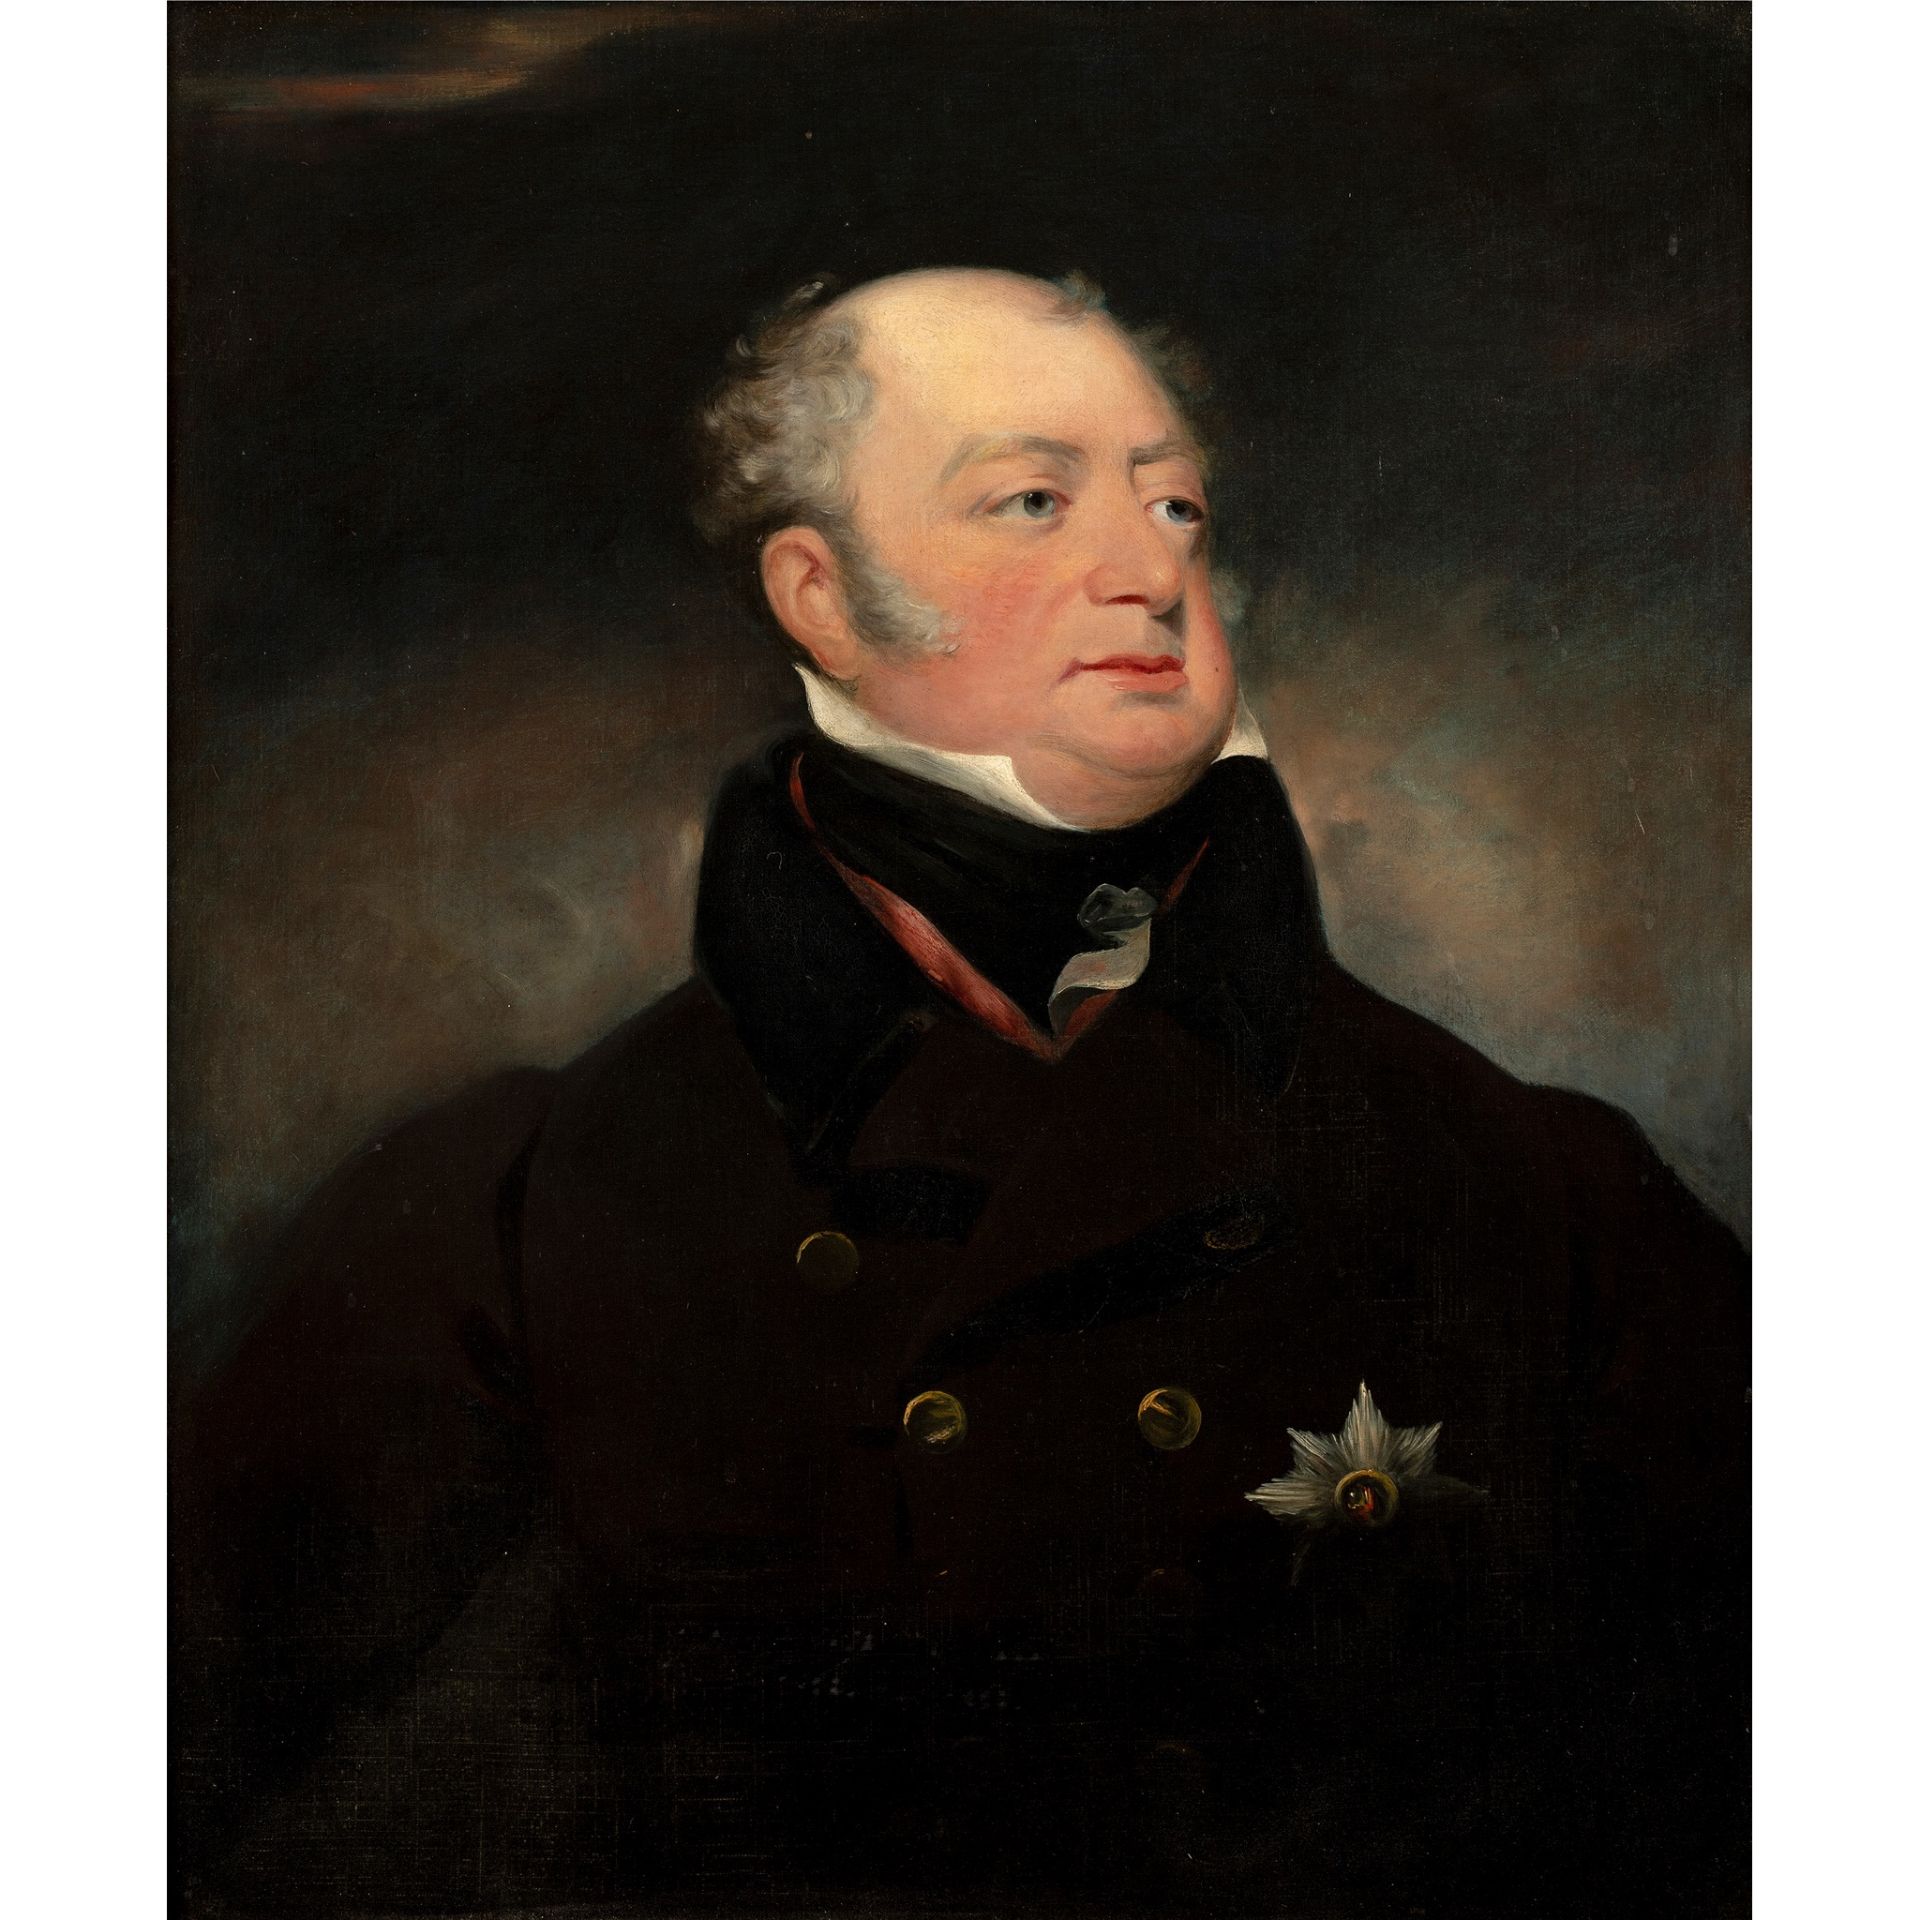 JOHN JACKSON R.A. (BRITISH 1778-1831) PORTRAIT OF FREDERICK, DUKE OF YORK AND ALBANY (1763-1827)